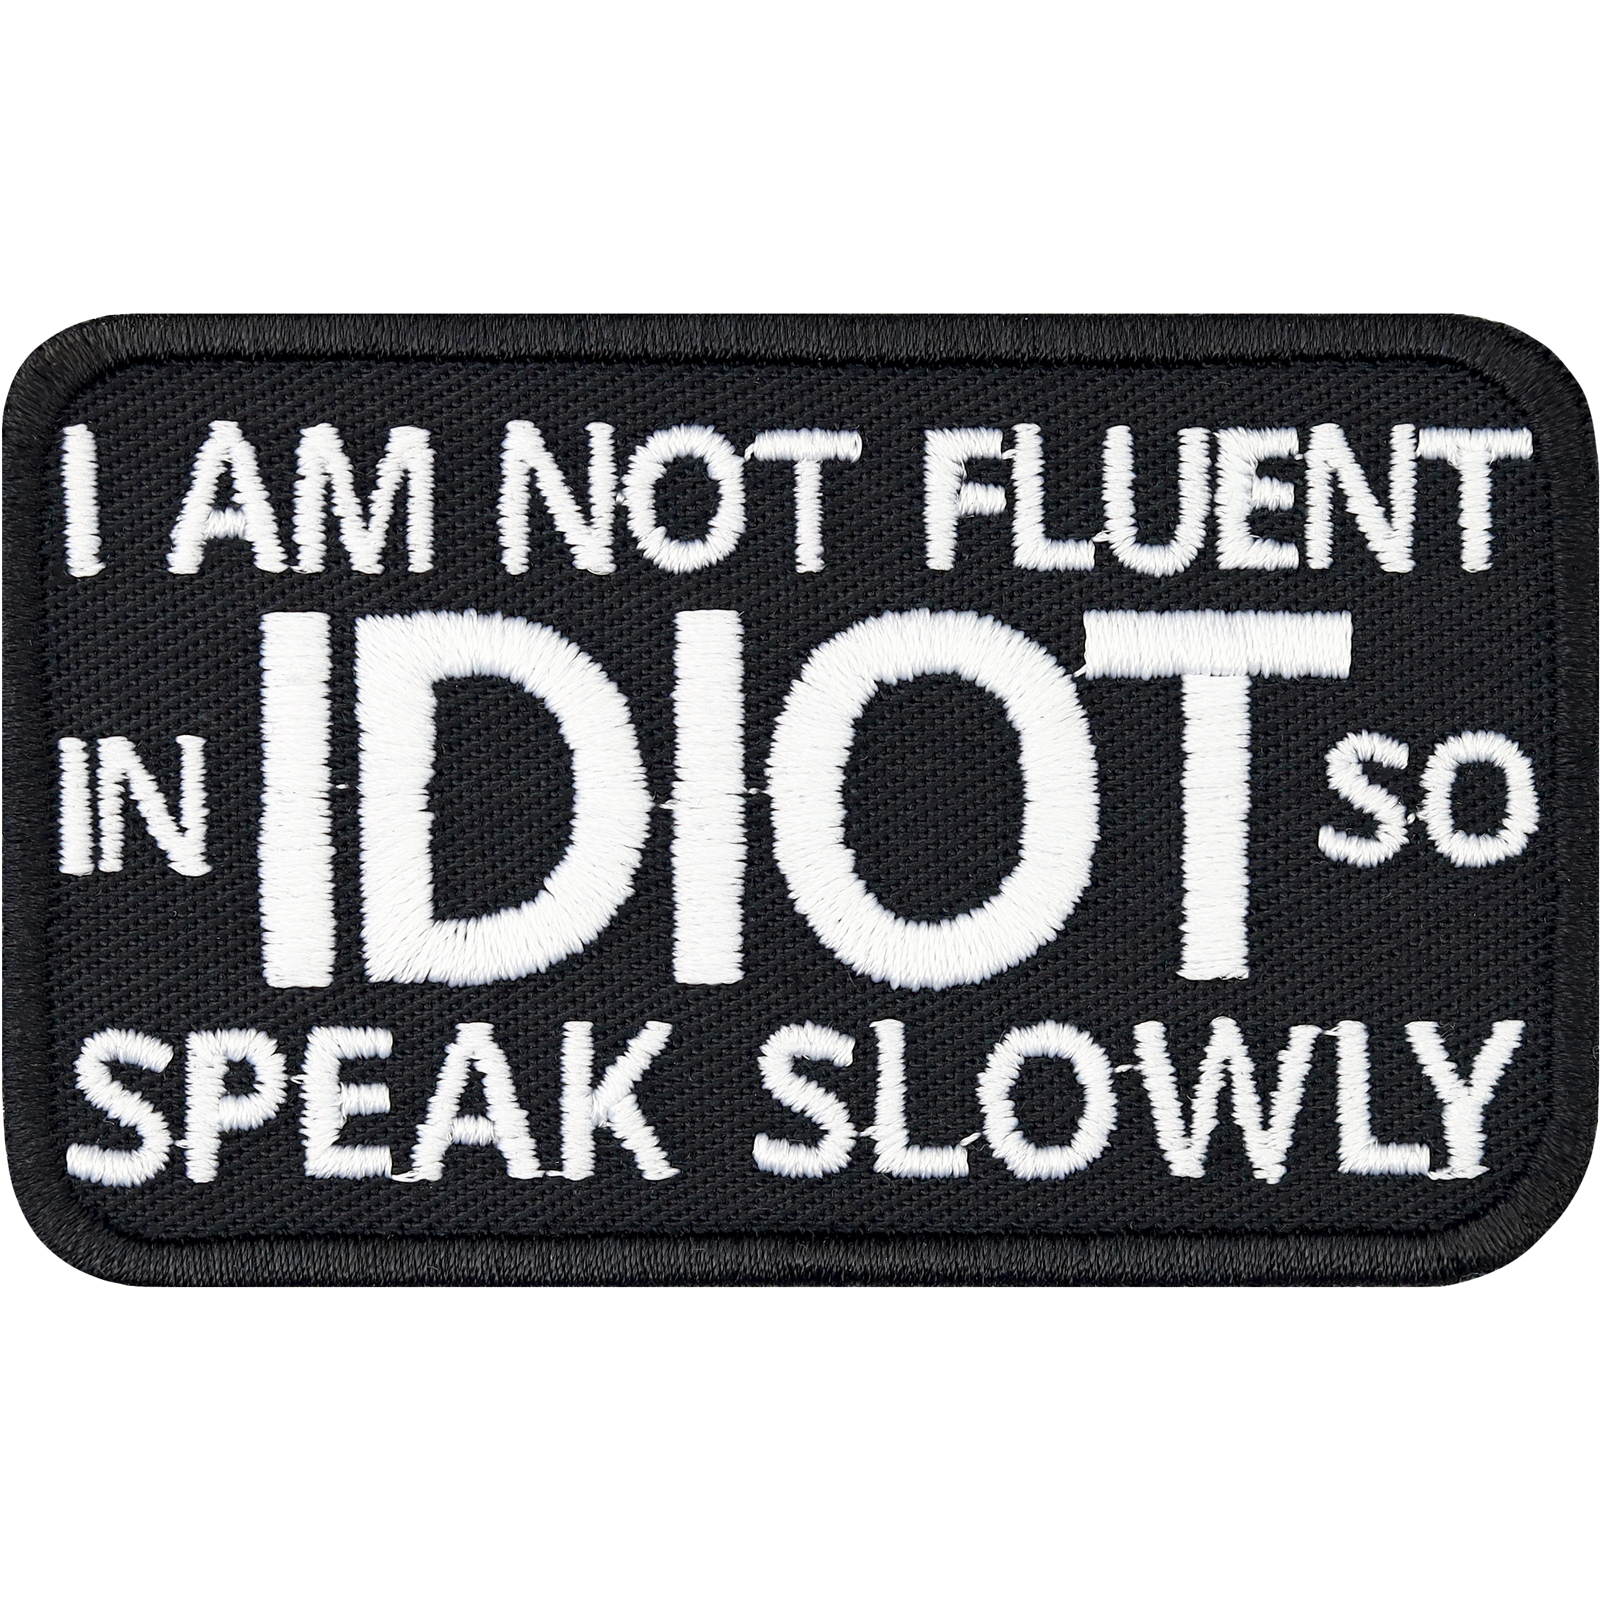 I am not fluent in idiot so speak slowly. - Patch